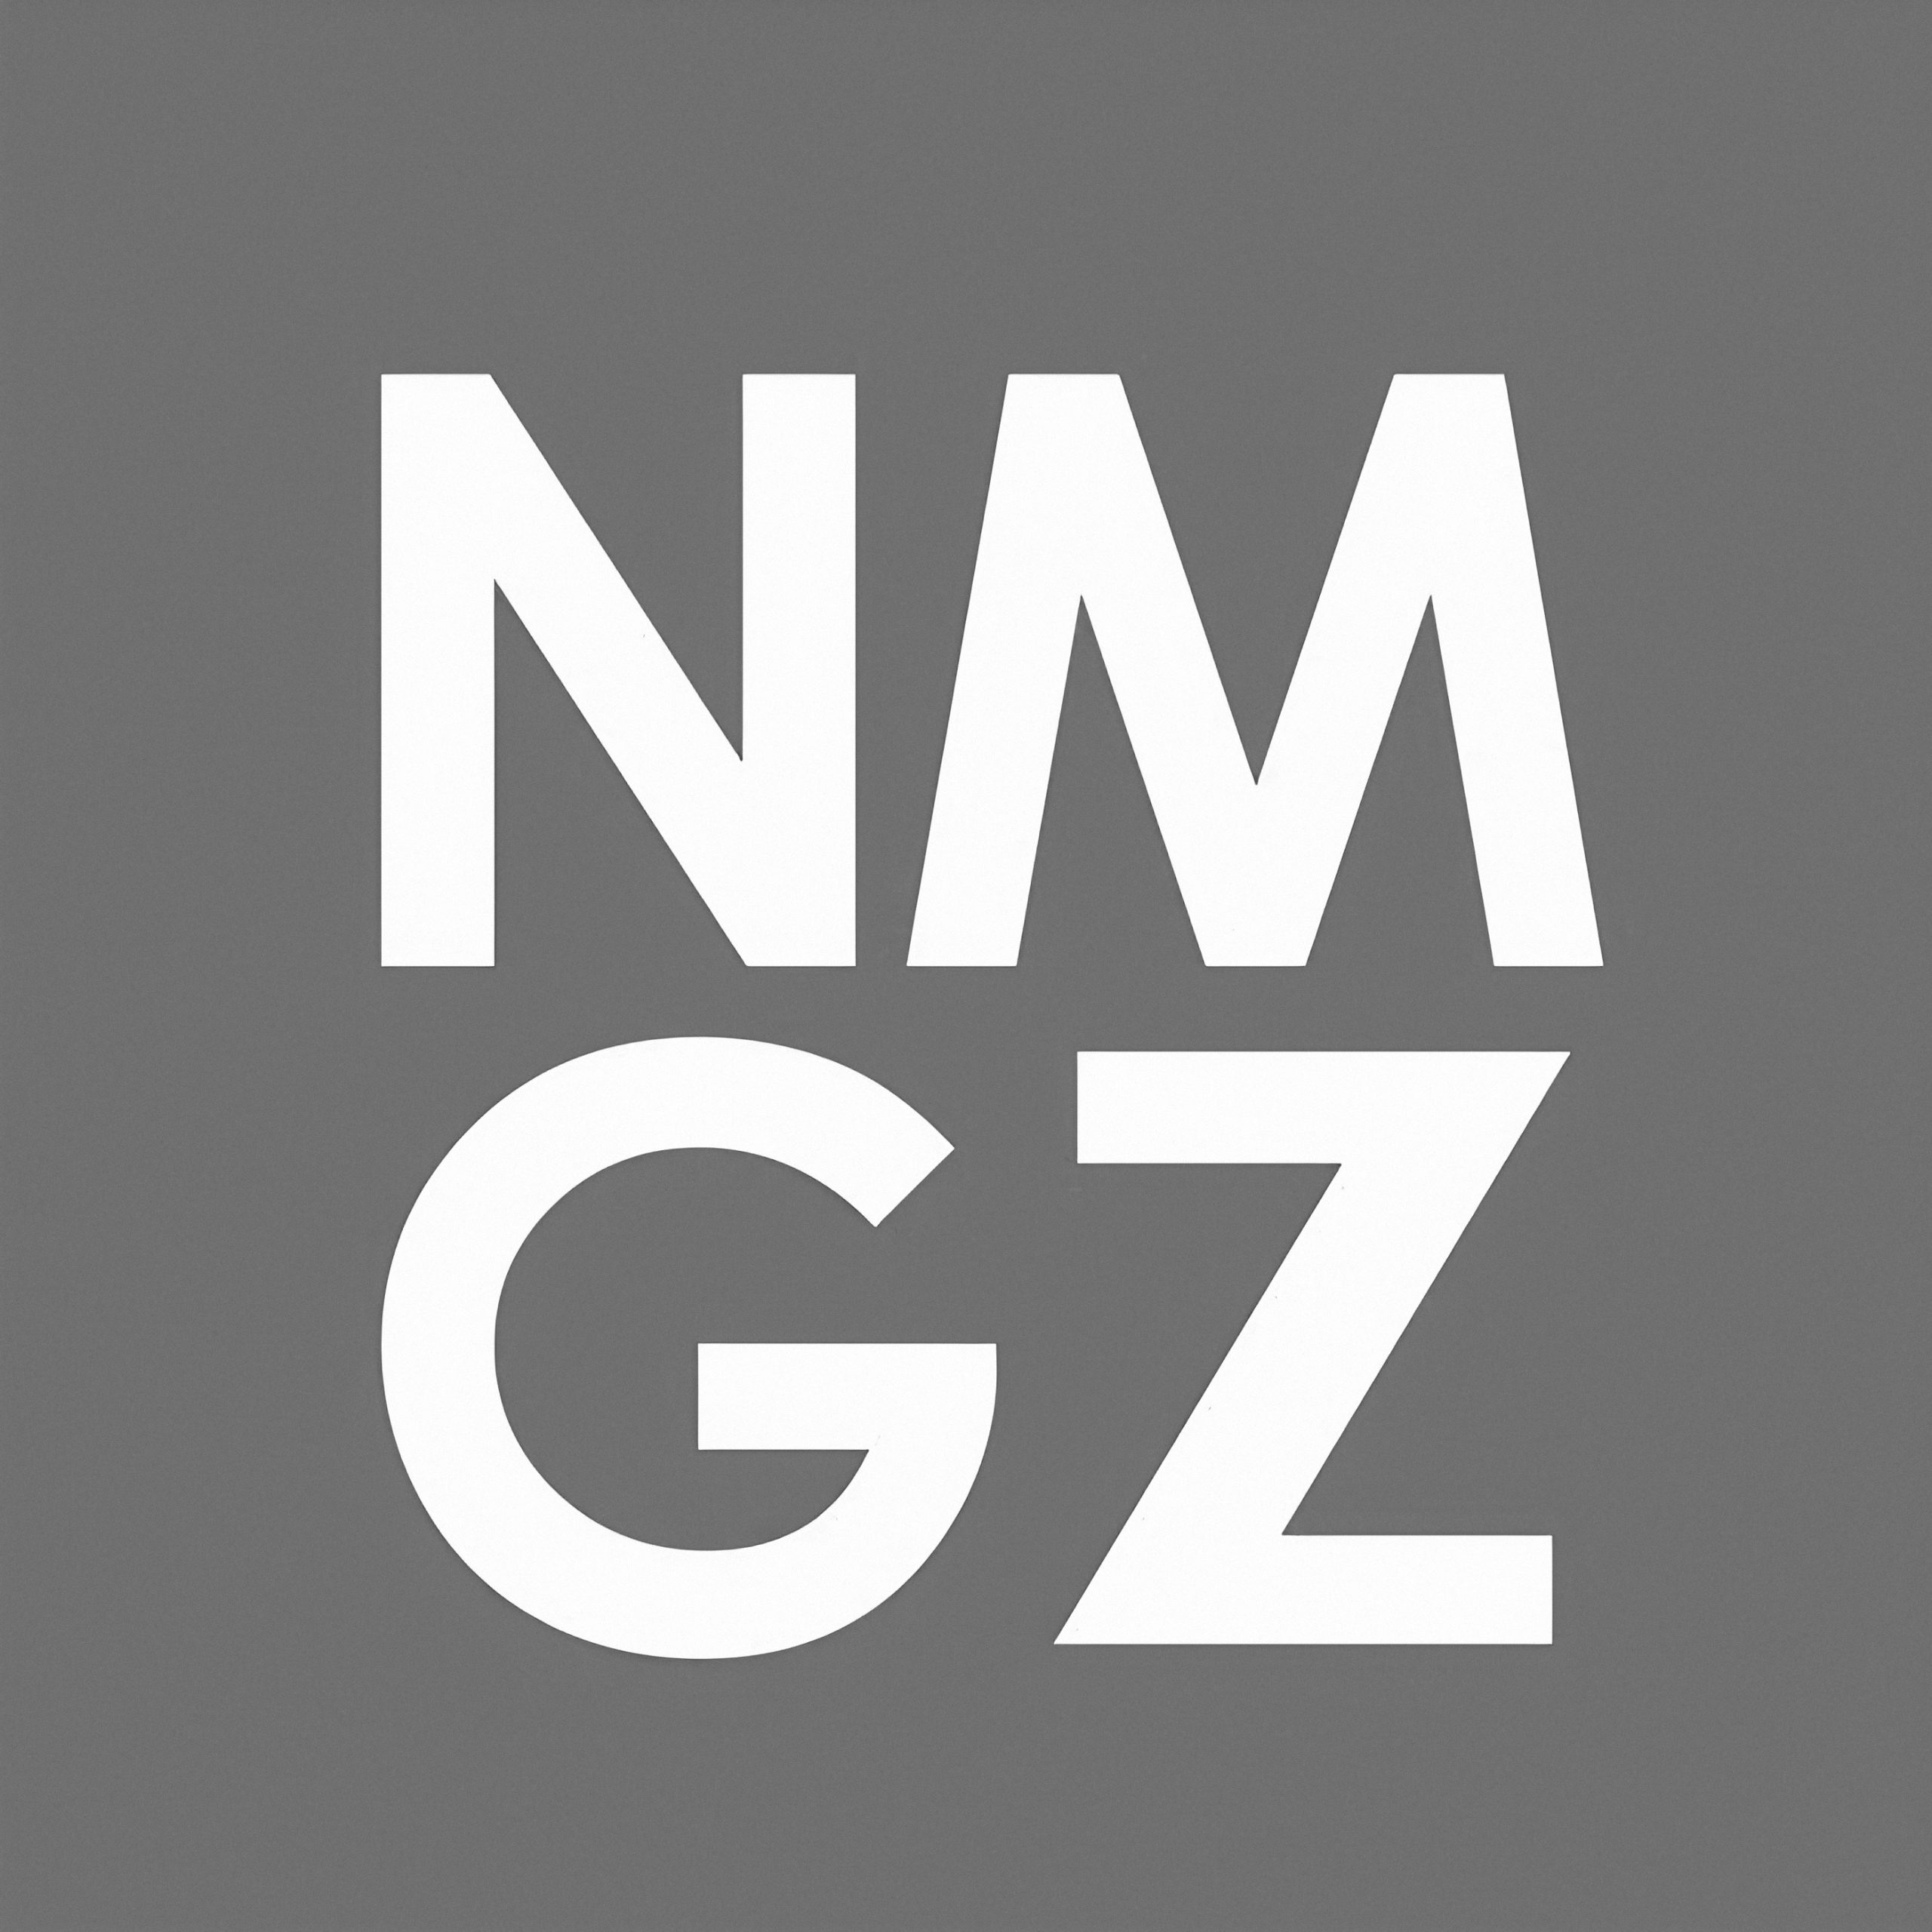 NGMZ (National Millennial & Gen Z Community) logo